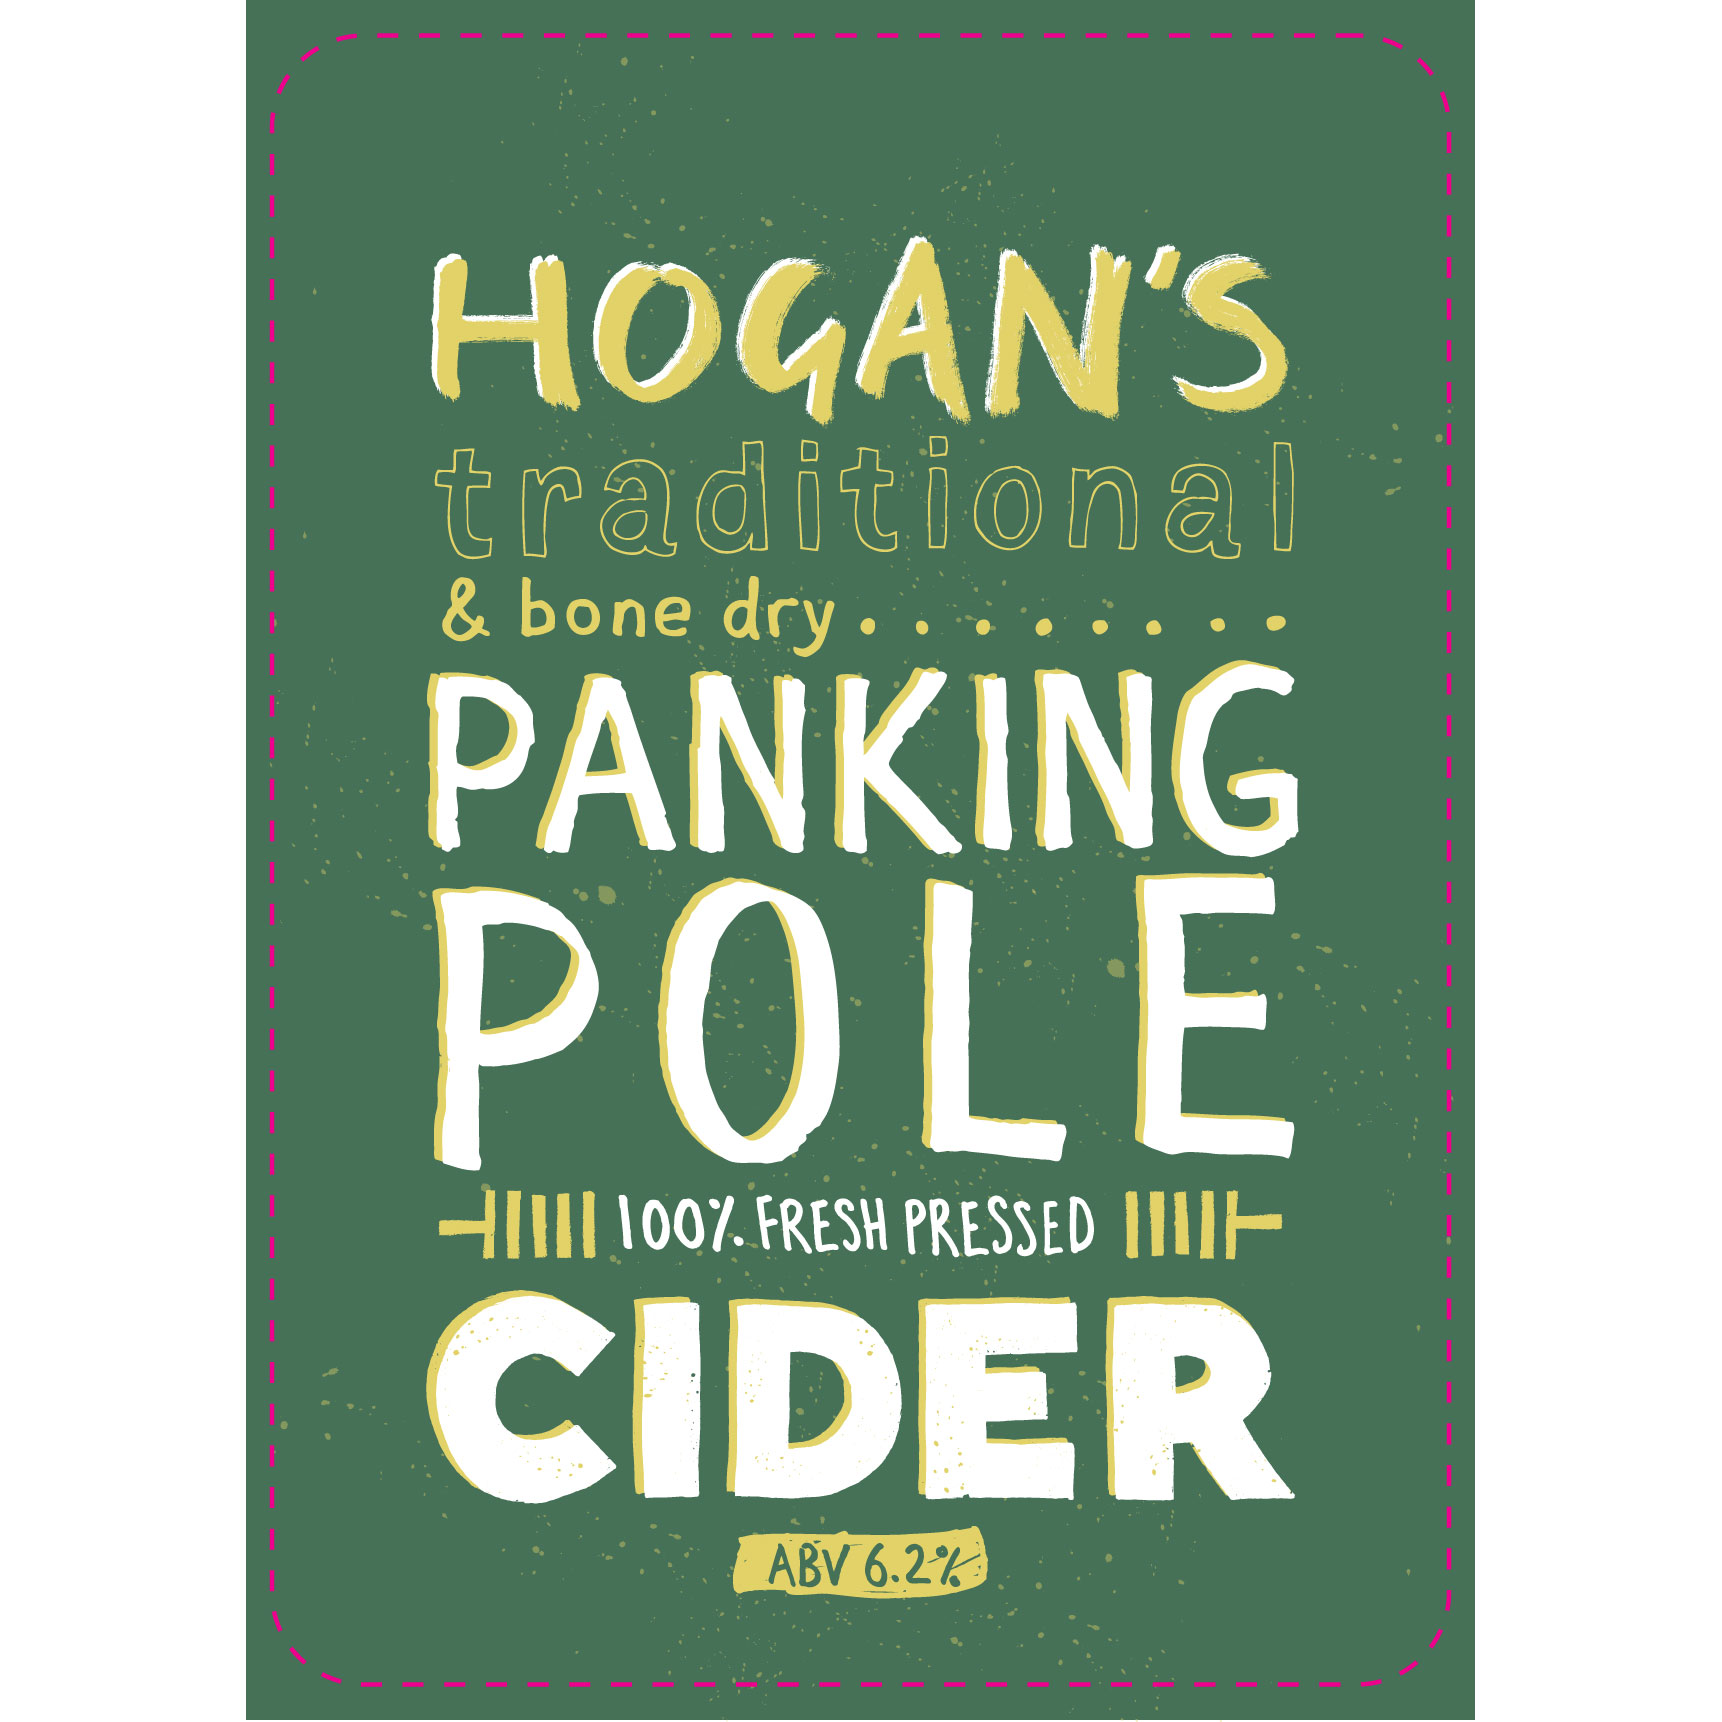 Hogan's Panking Pole Cider 20L Bag in Box